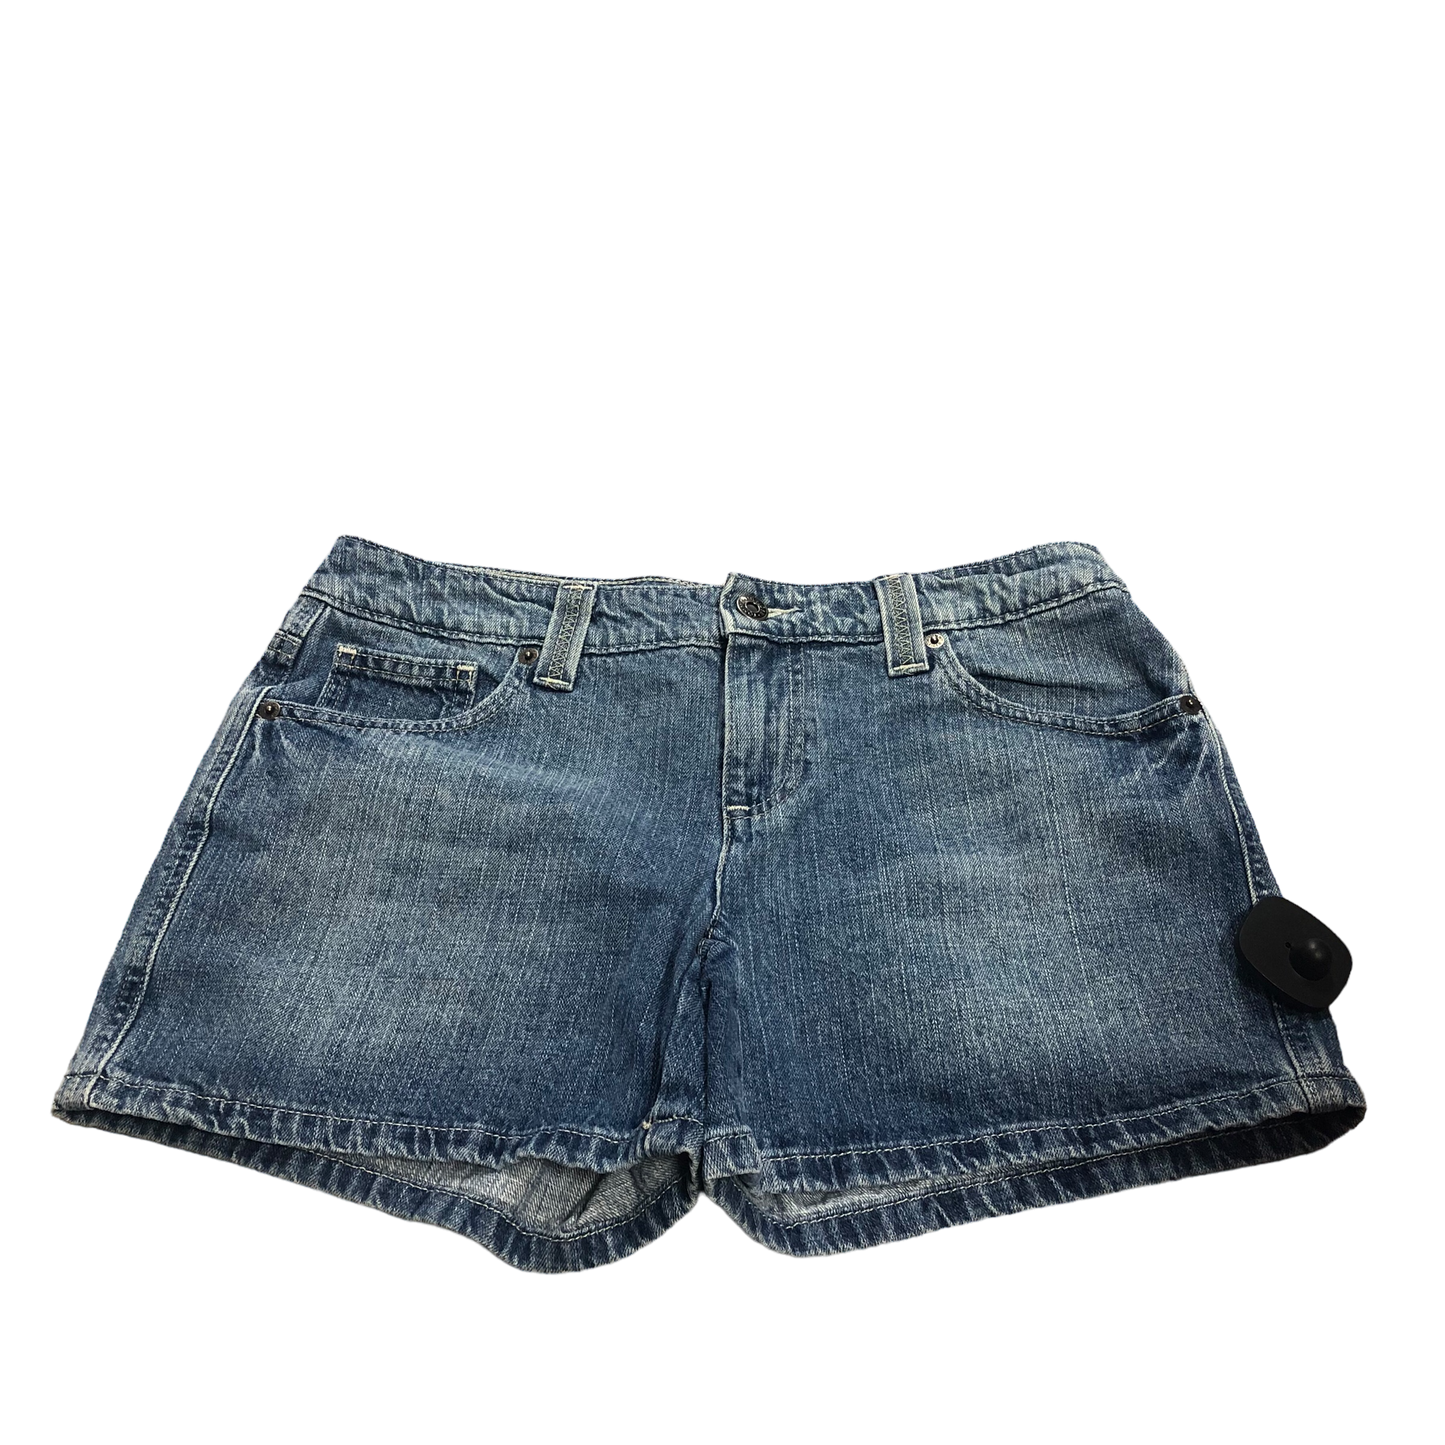 Blue Denim Shorts Tommy Hilfiger, Size 6